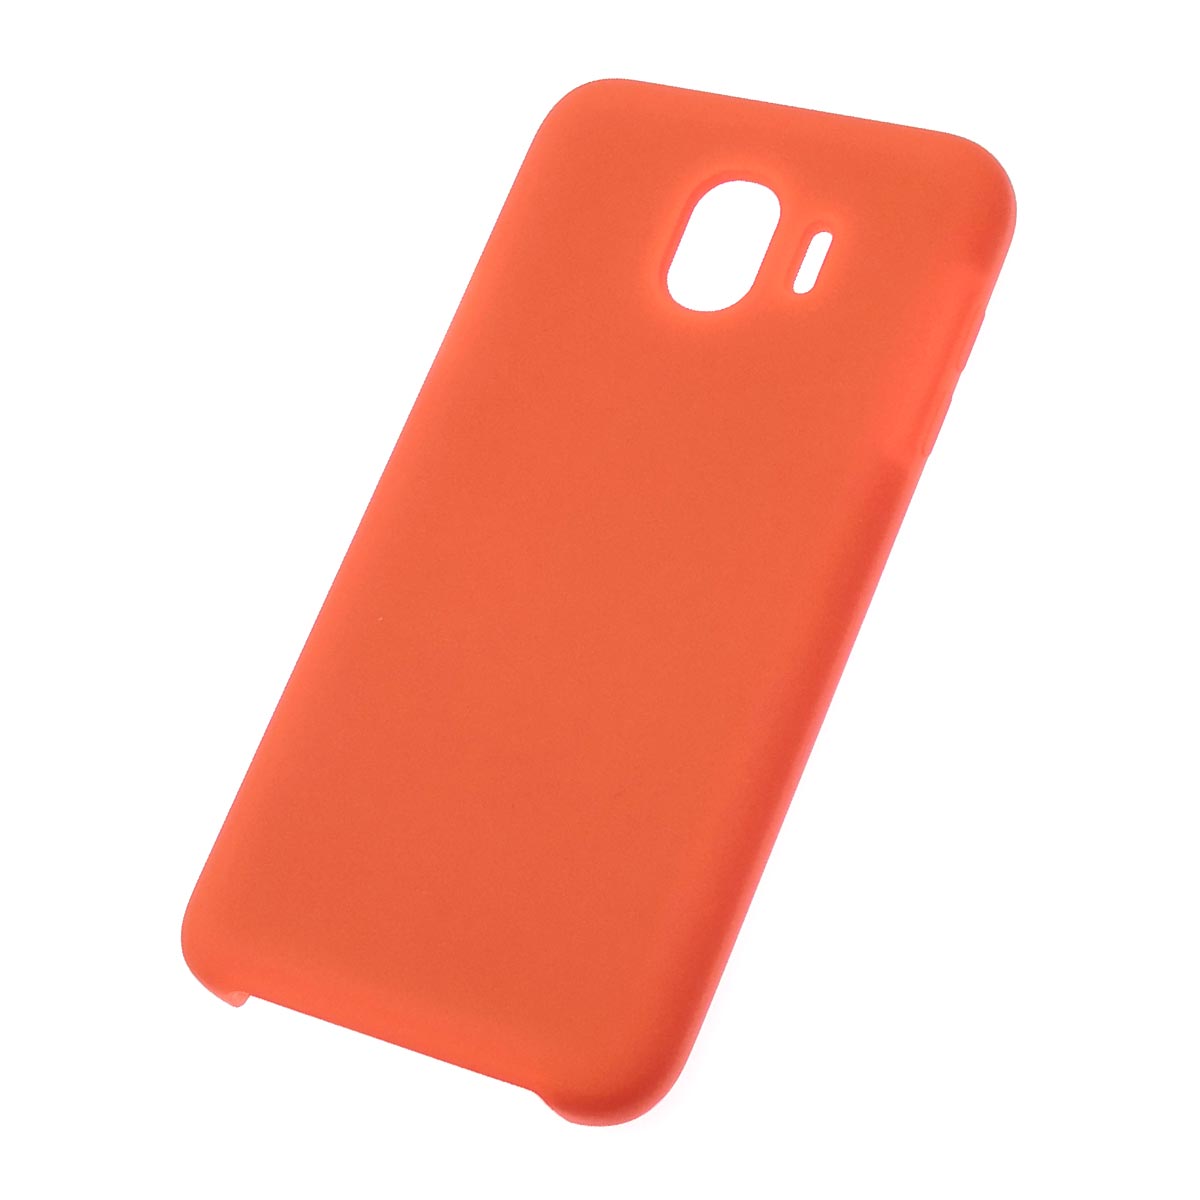 Чехол накладка Silicon Cover для SAMSUNG Galaxy J4 2018 (SM-J400), силикон, бархат, цвет оранжевый